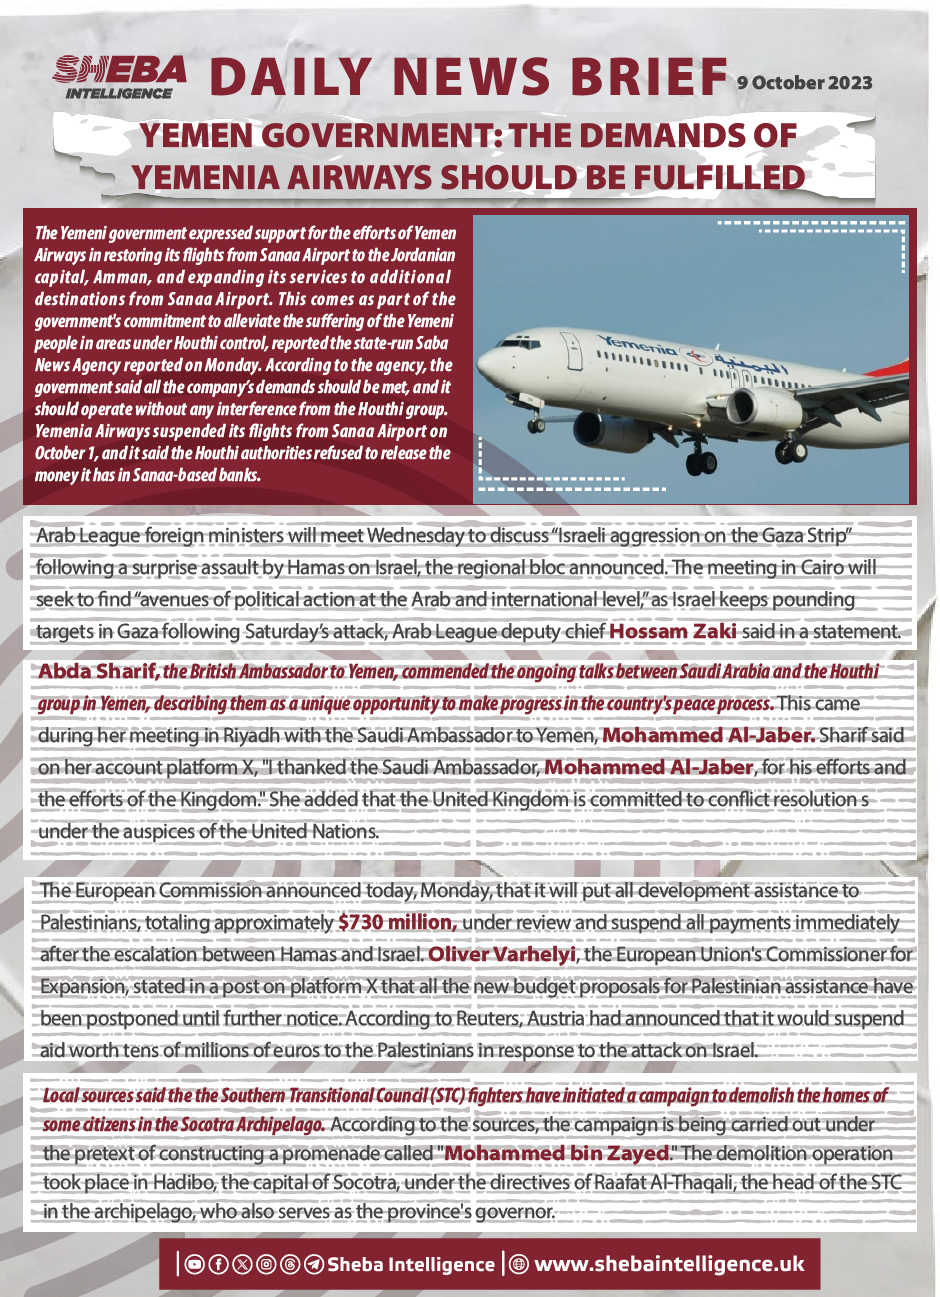 Yemen Government: The Demands of Yemenia Airways Should Be Fulfilled